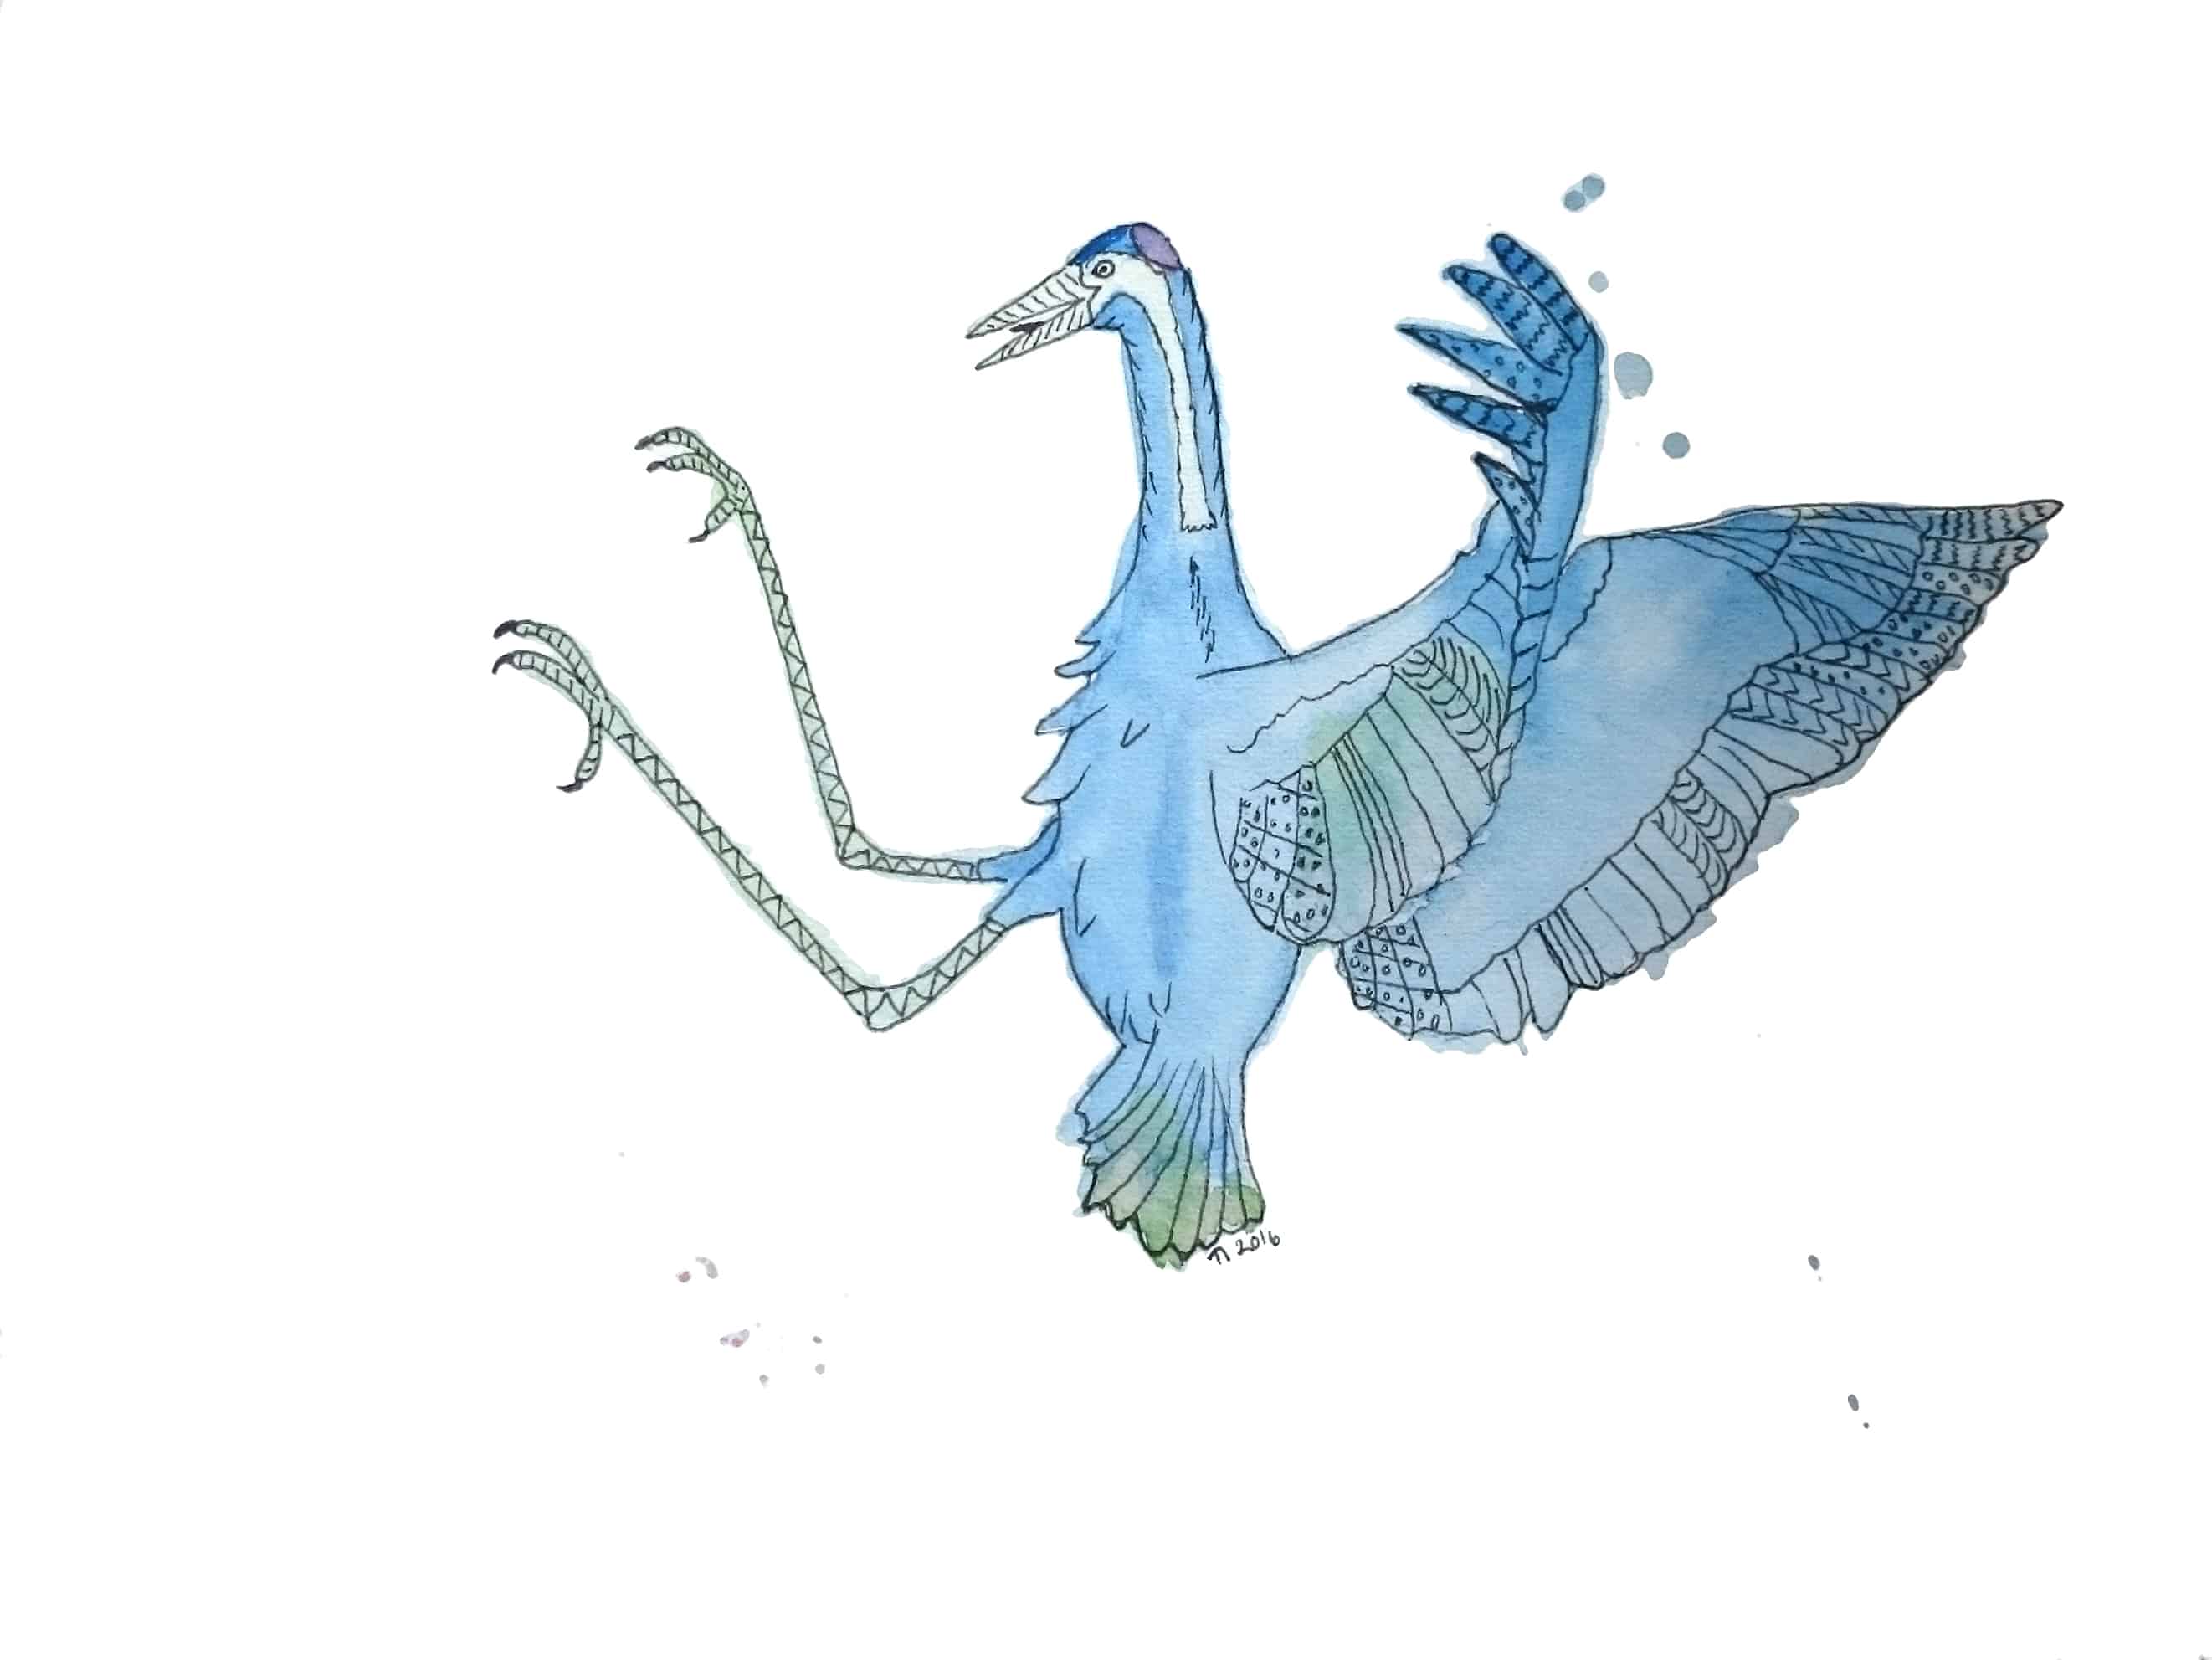 Strange Bird 8: Green & Blue Kung Fu Crane by Linda Ursin